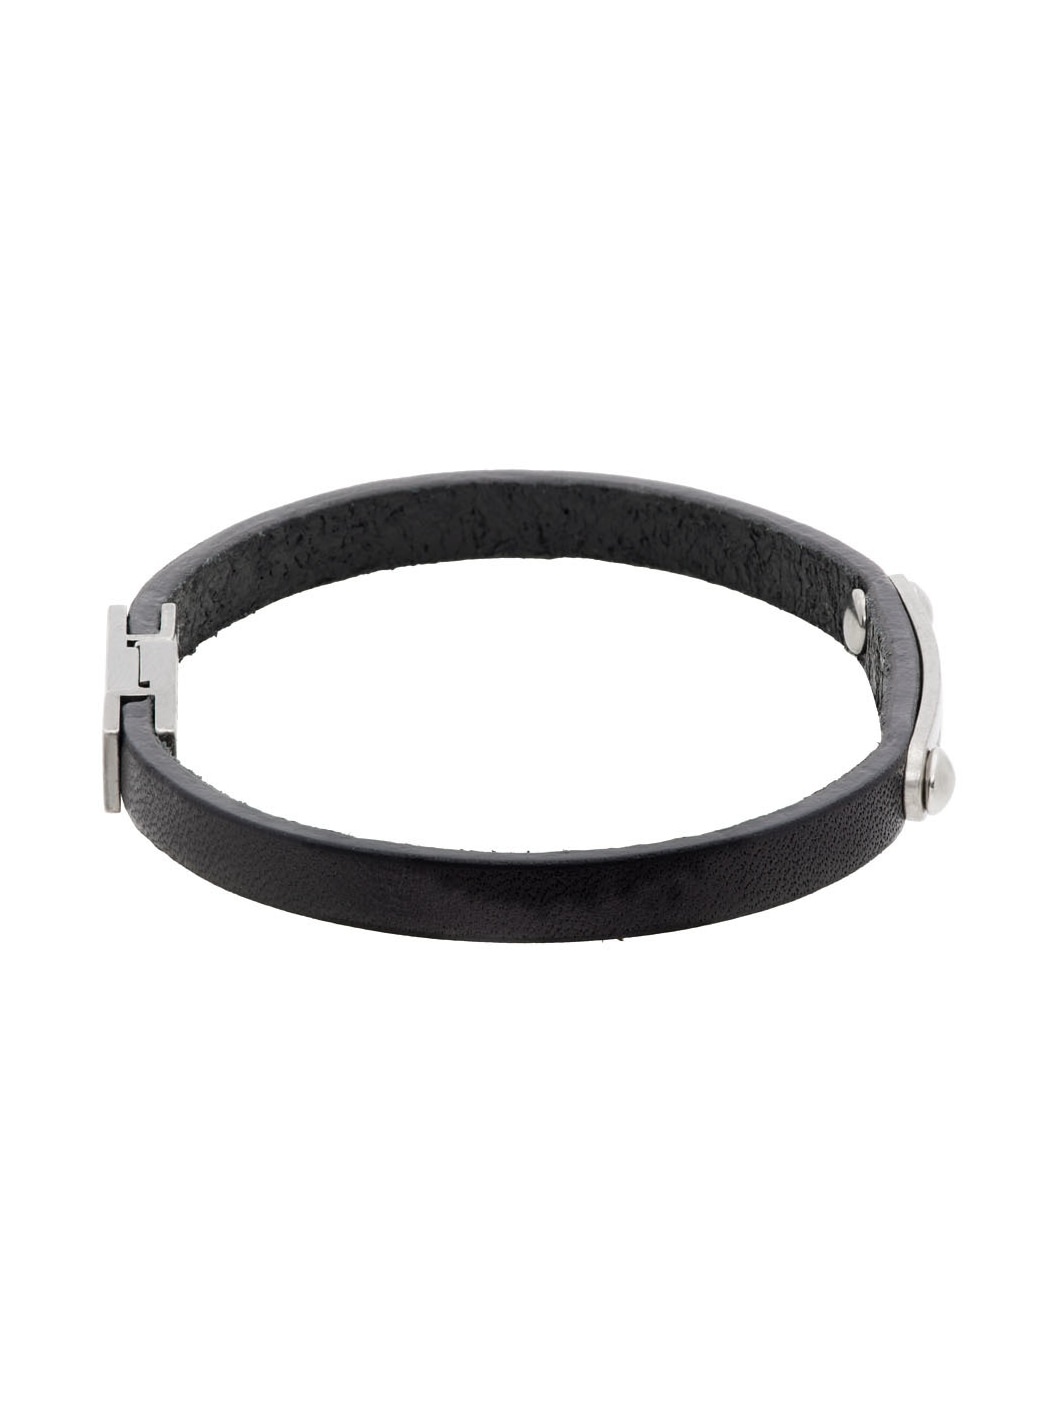 Black Thin ID Bracelet - 5